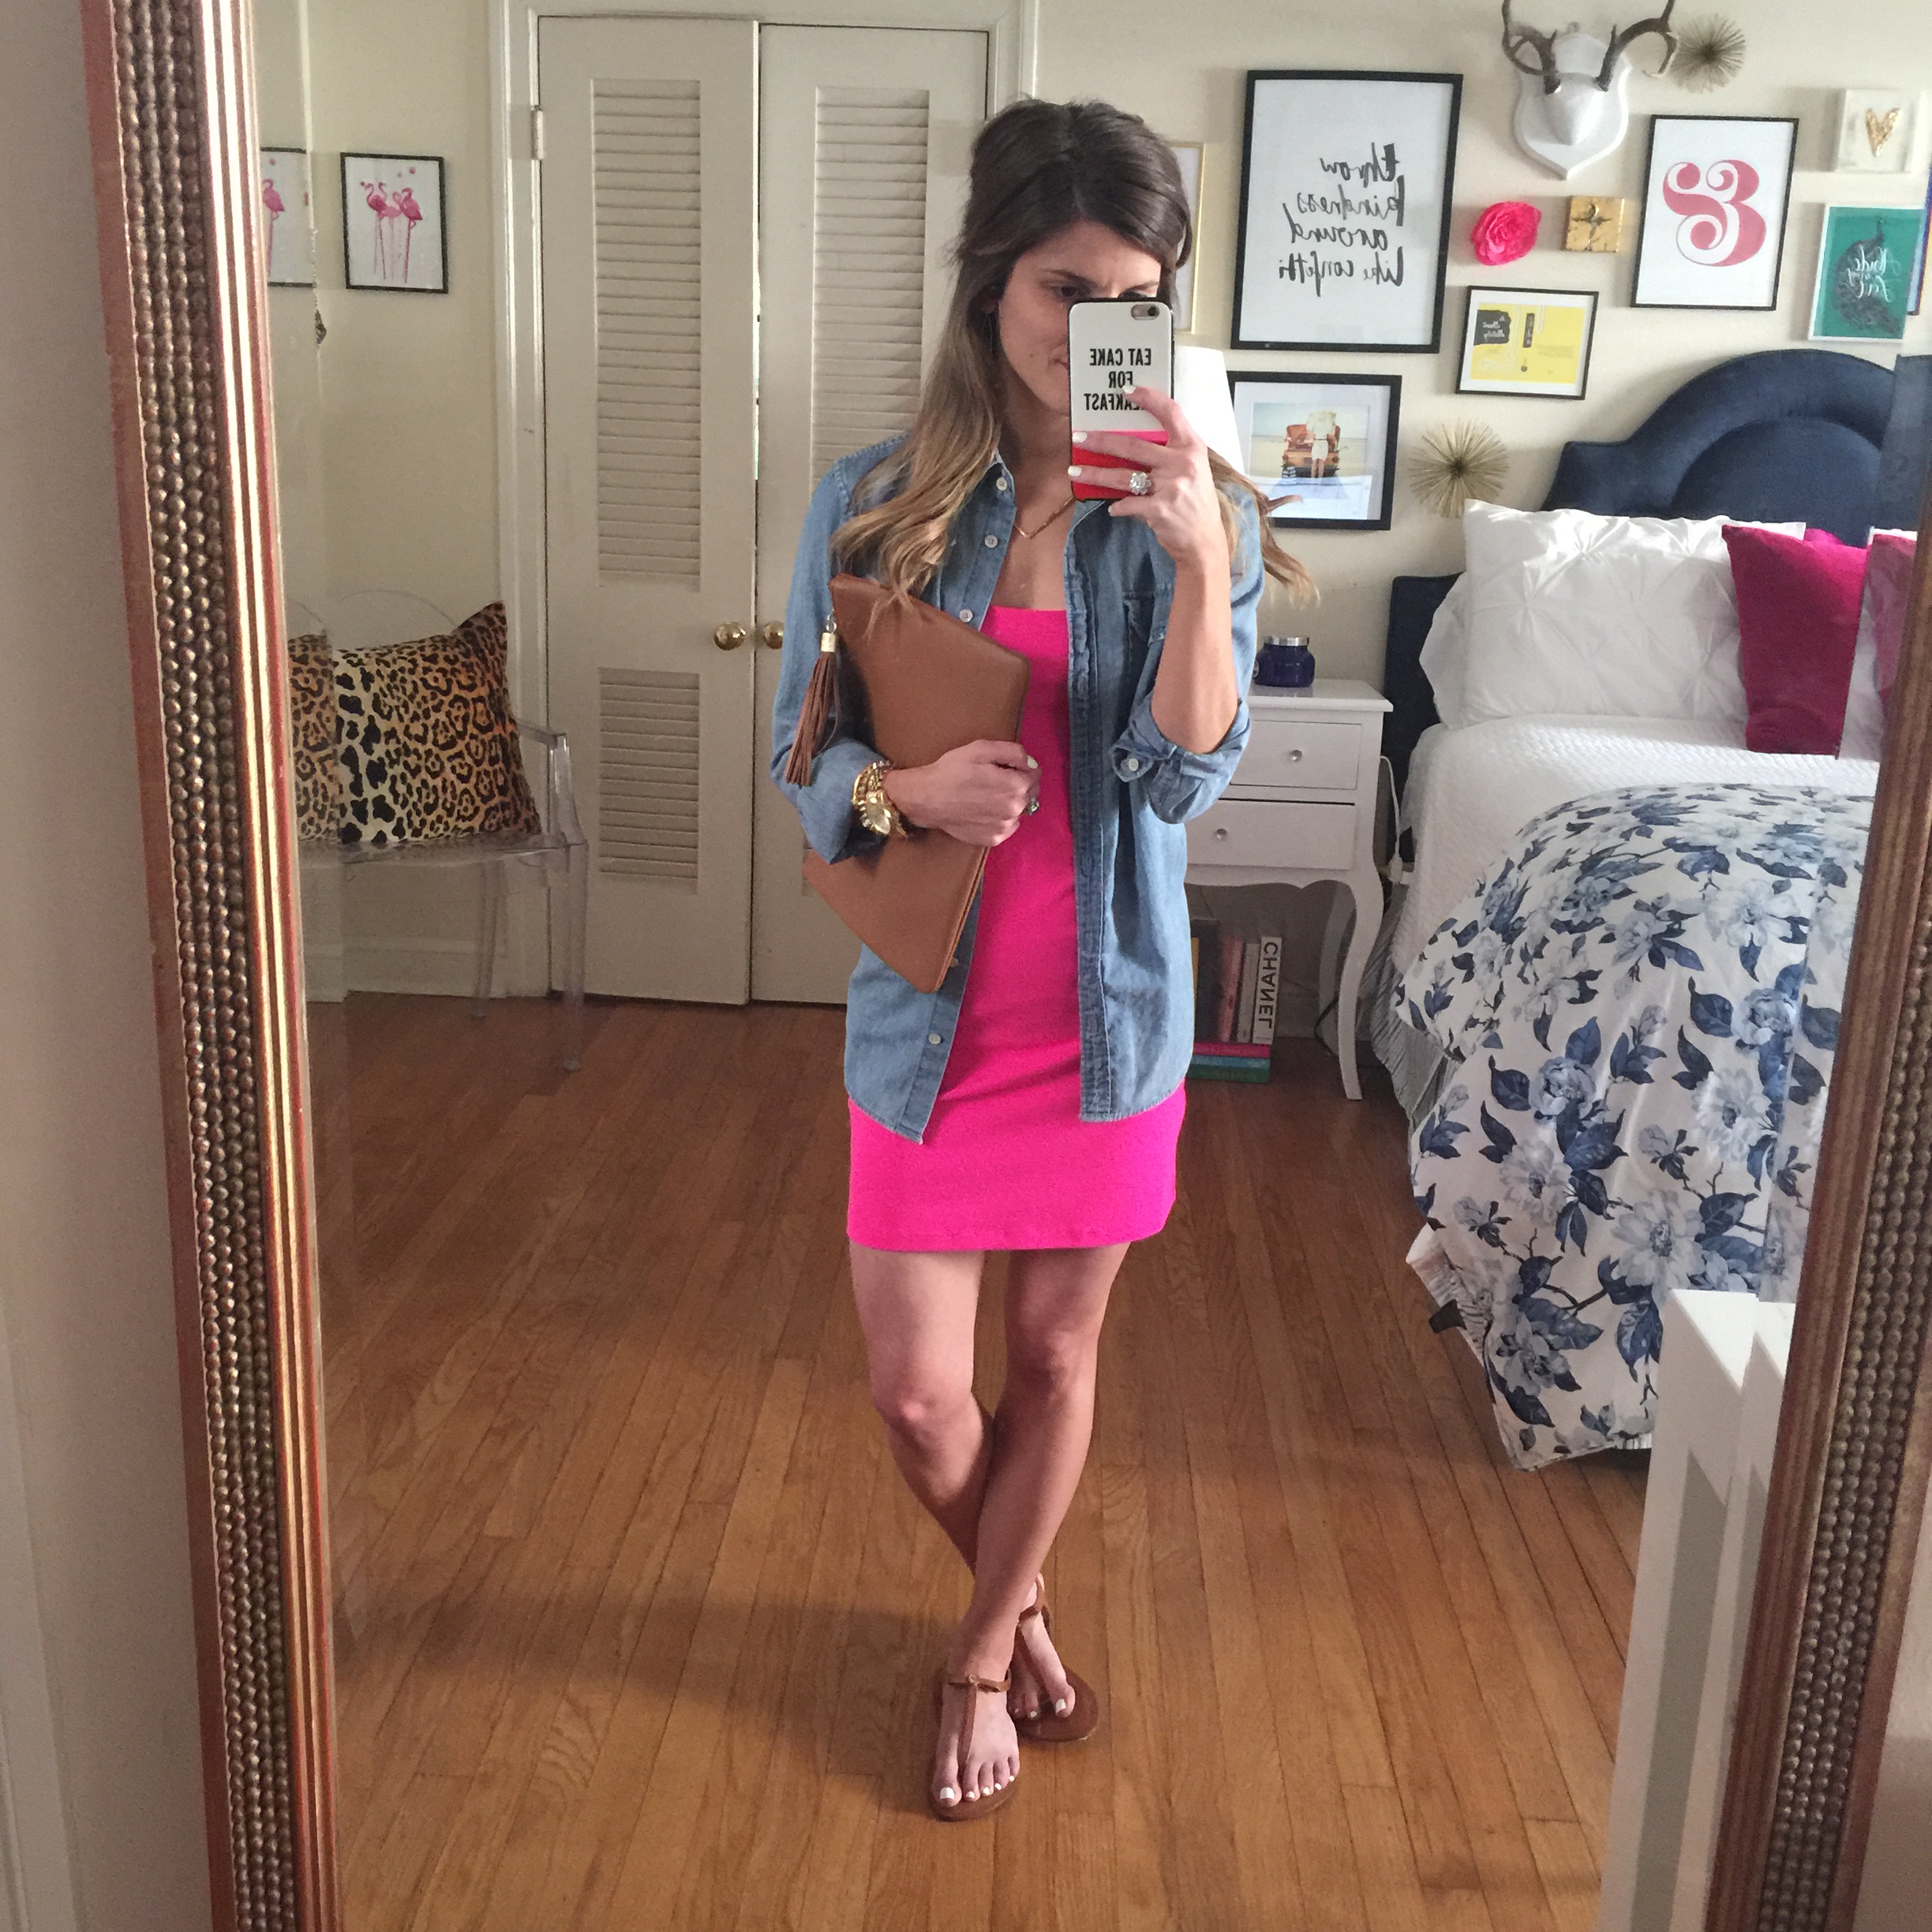 @brightonkeller instagram mirror selfie wearing Susana Monaco Hot Pink Dress, Chambray worn as cardigan, giginy uber clutch in tan, mk sandals